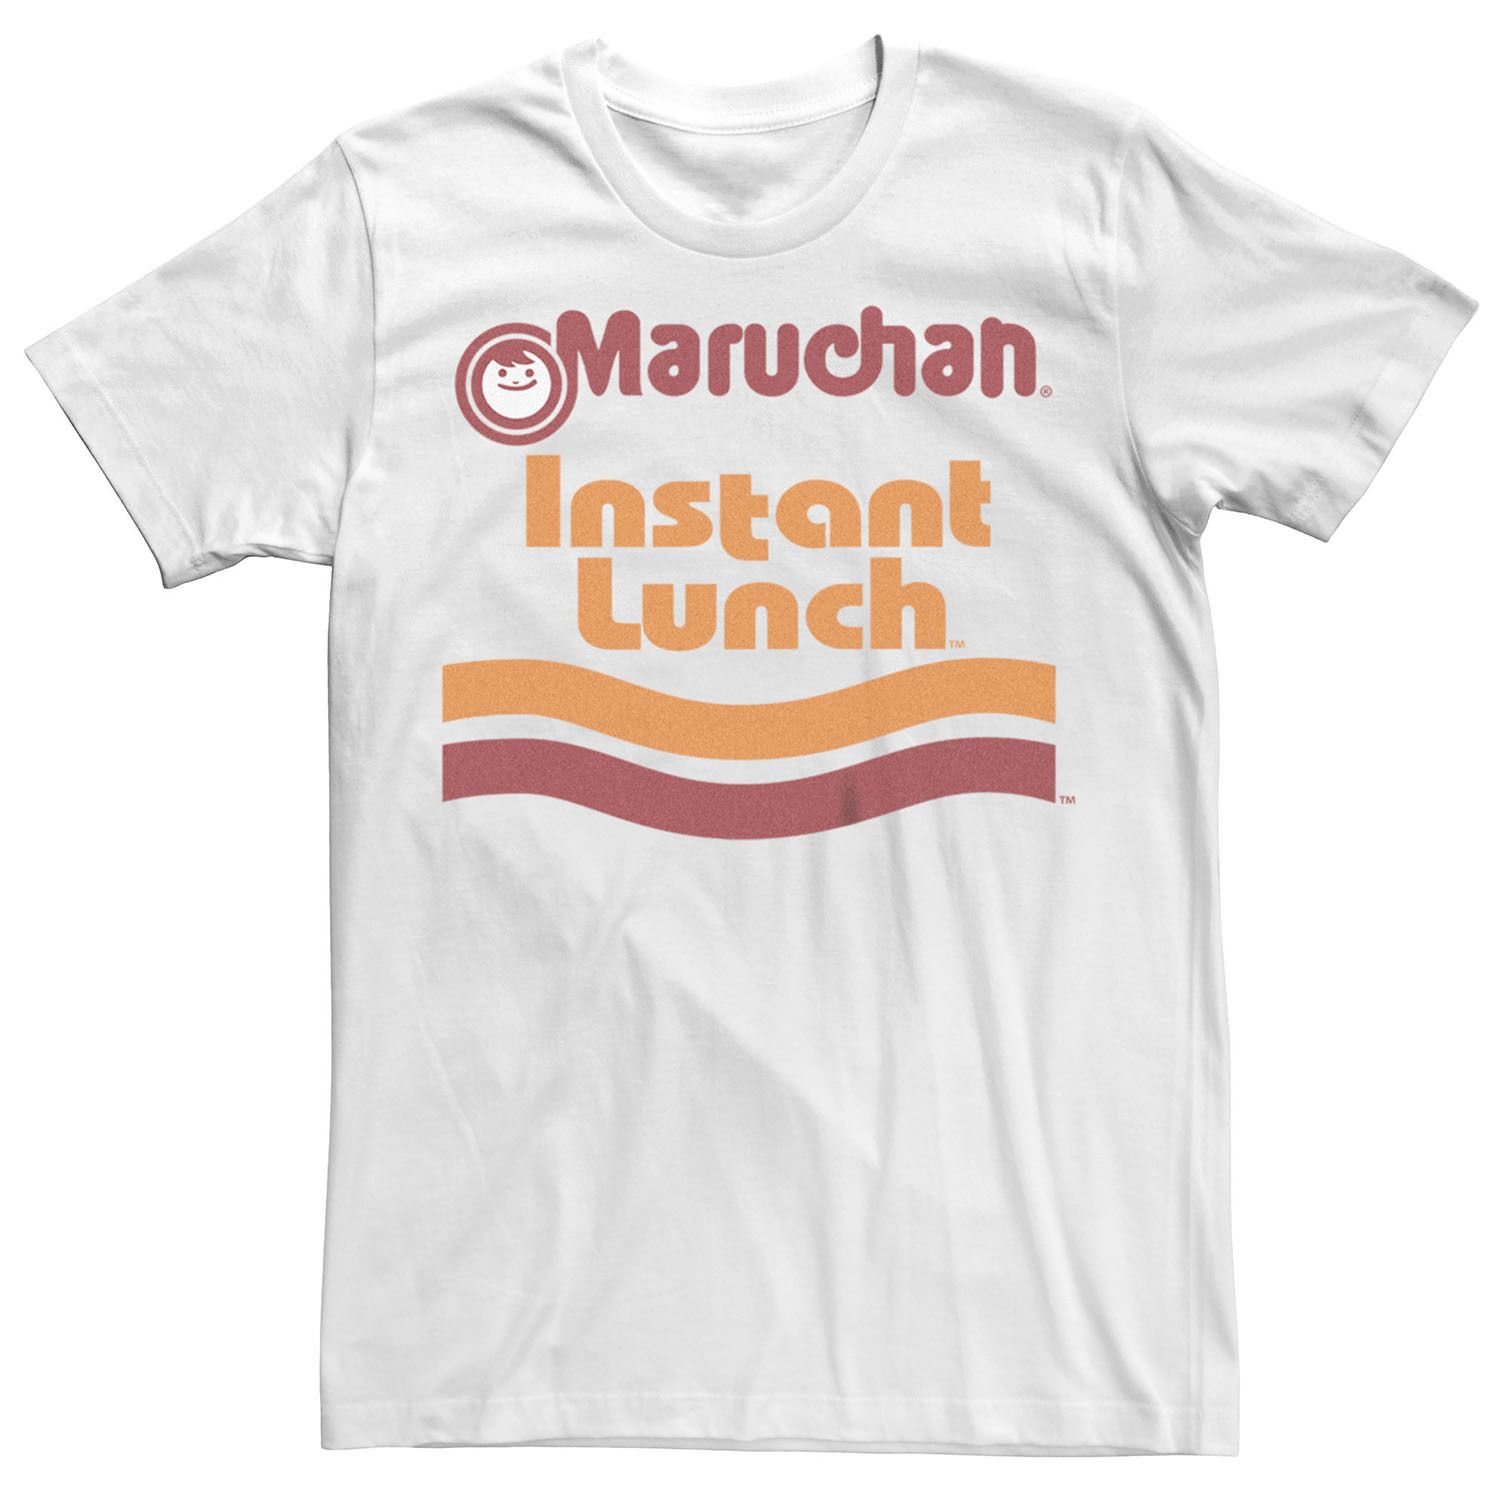 Мужская футболка Maruchan Instant Lunch Classic с графическим логотипом Licensed Character